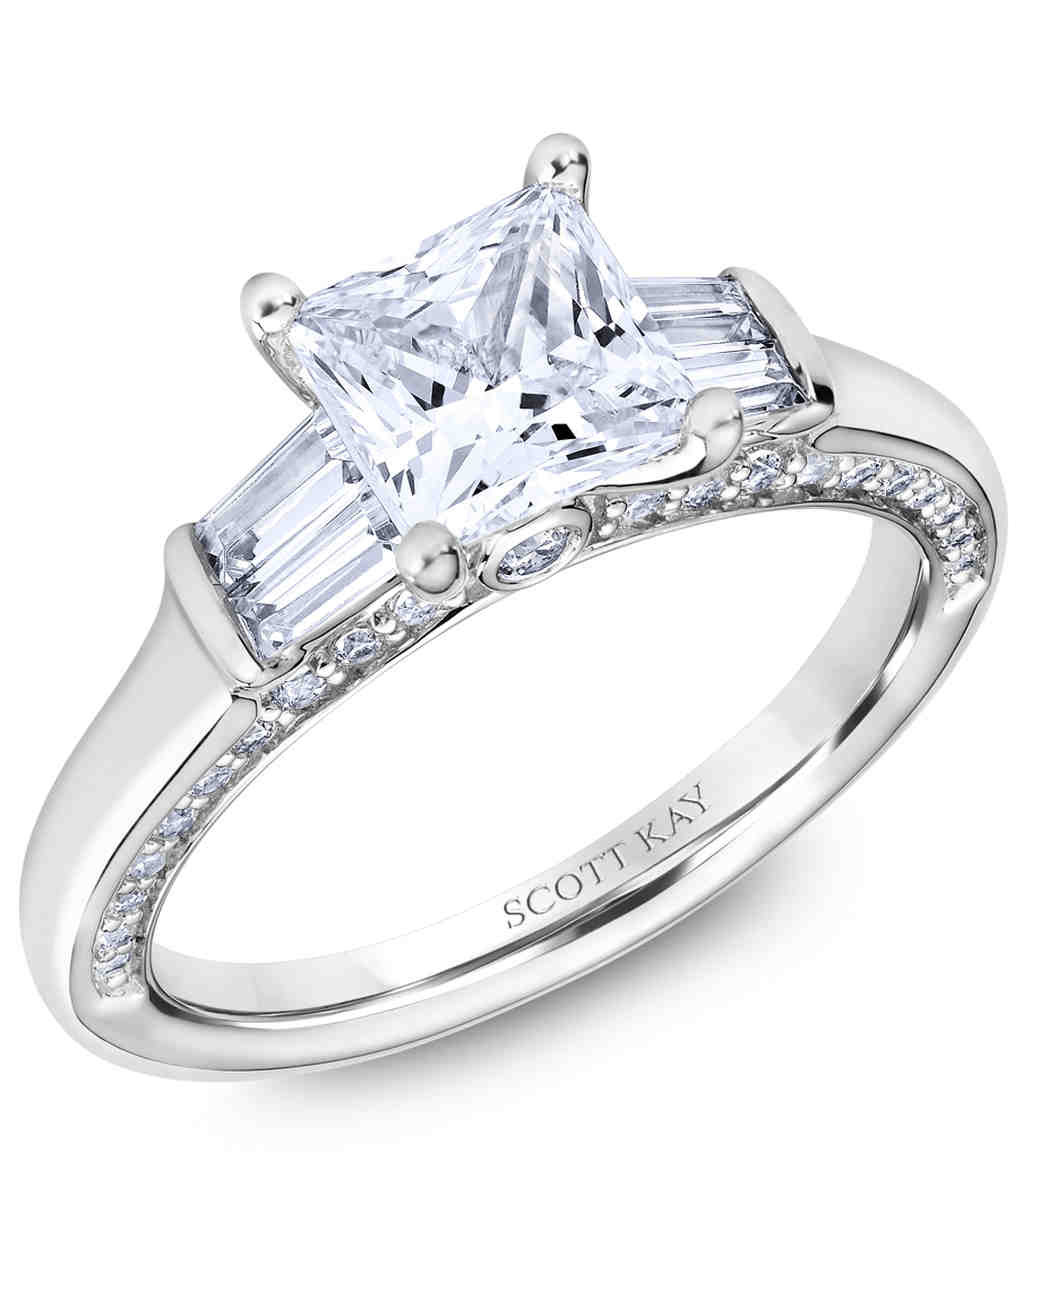 Engagement Princess Cut Rings
 30 Princess Cut Diamond Engagement Rings We Love